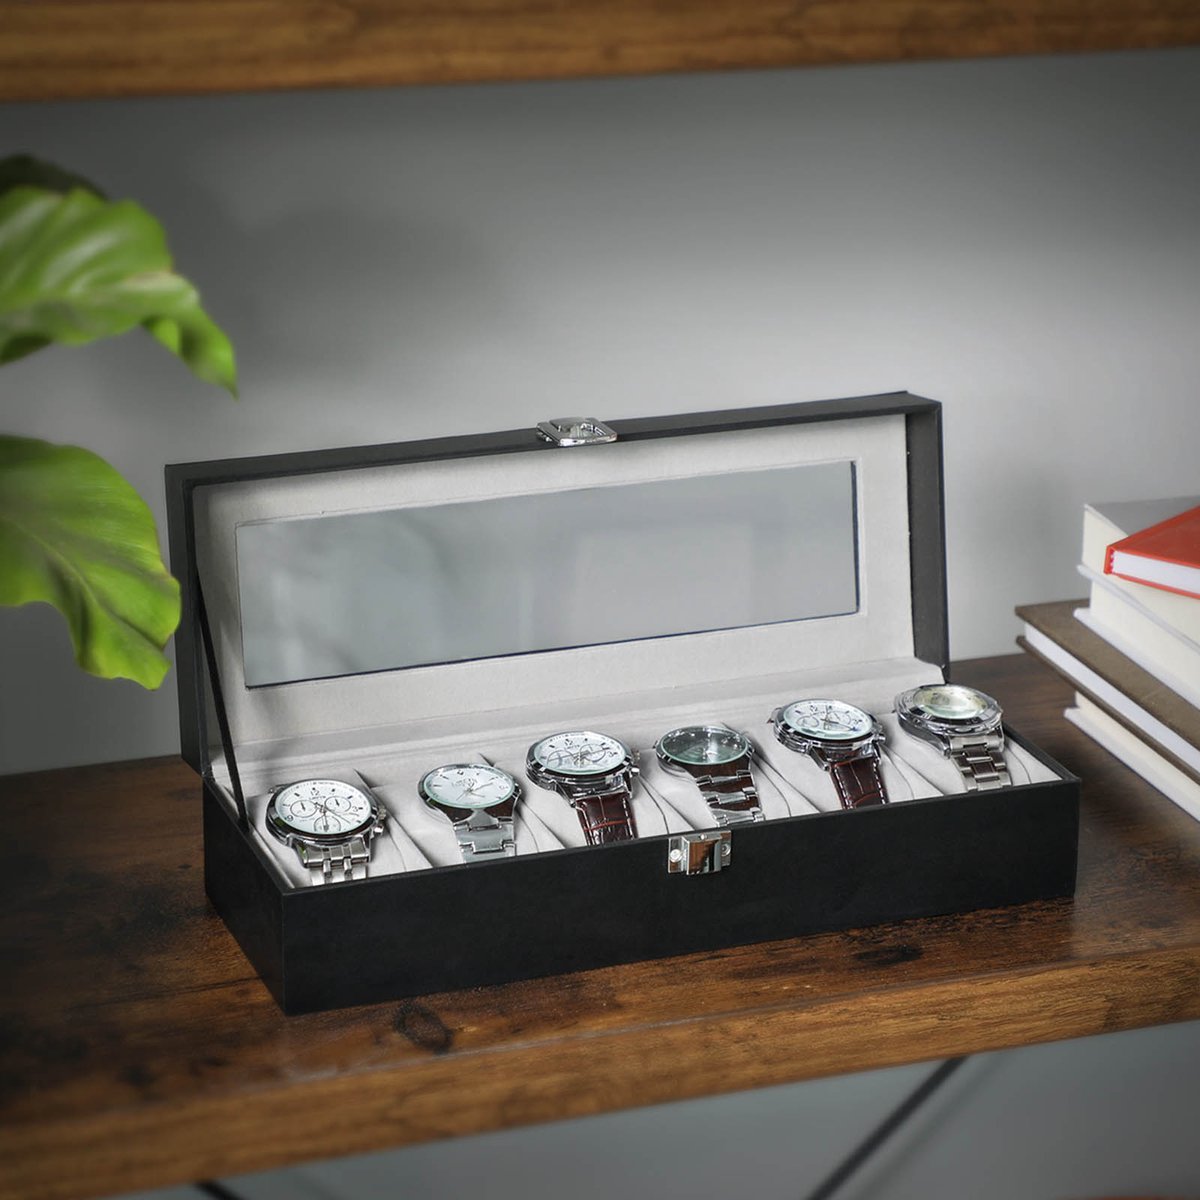 Horlogebox - Horlogedoos - Horlogedoos - Horlogeboxen voor heren - Horlogeboxen voor dames - Voor 12 horloges - Zwart - Grijs